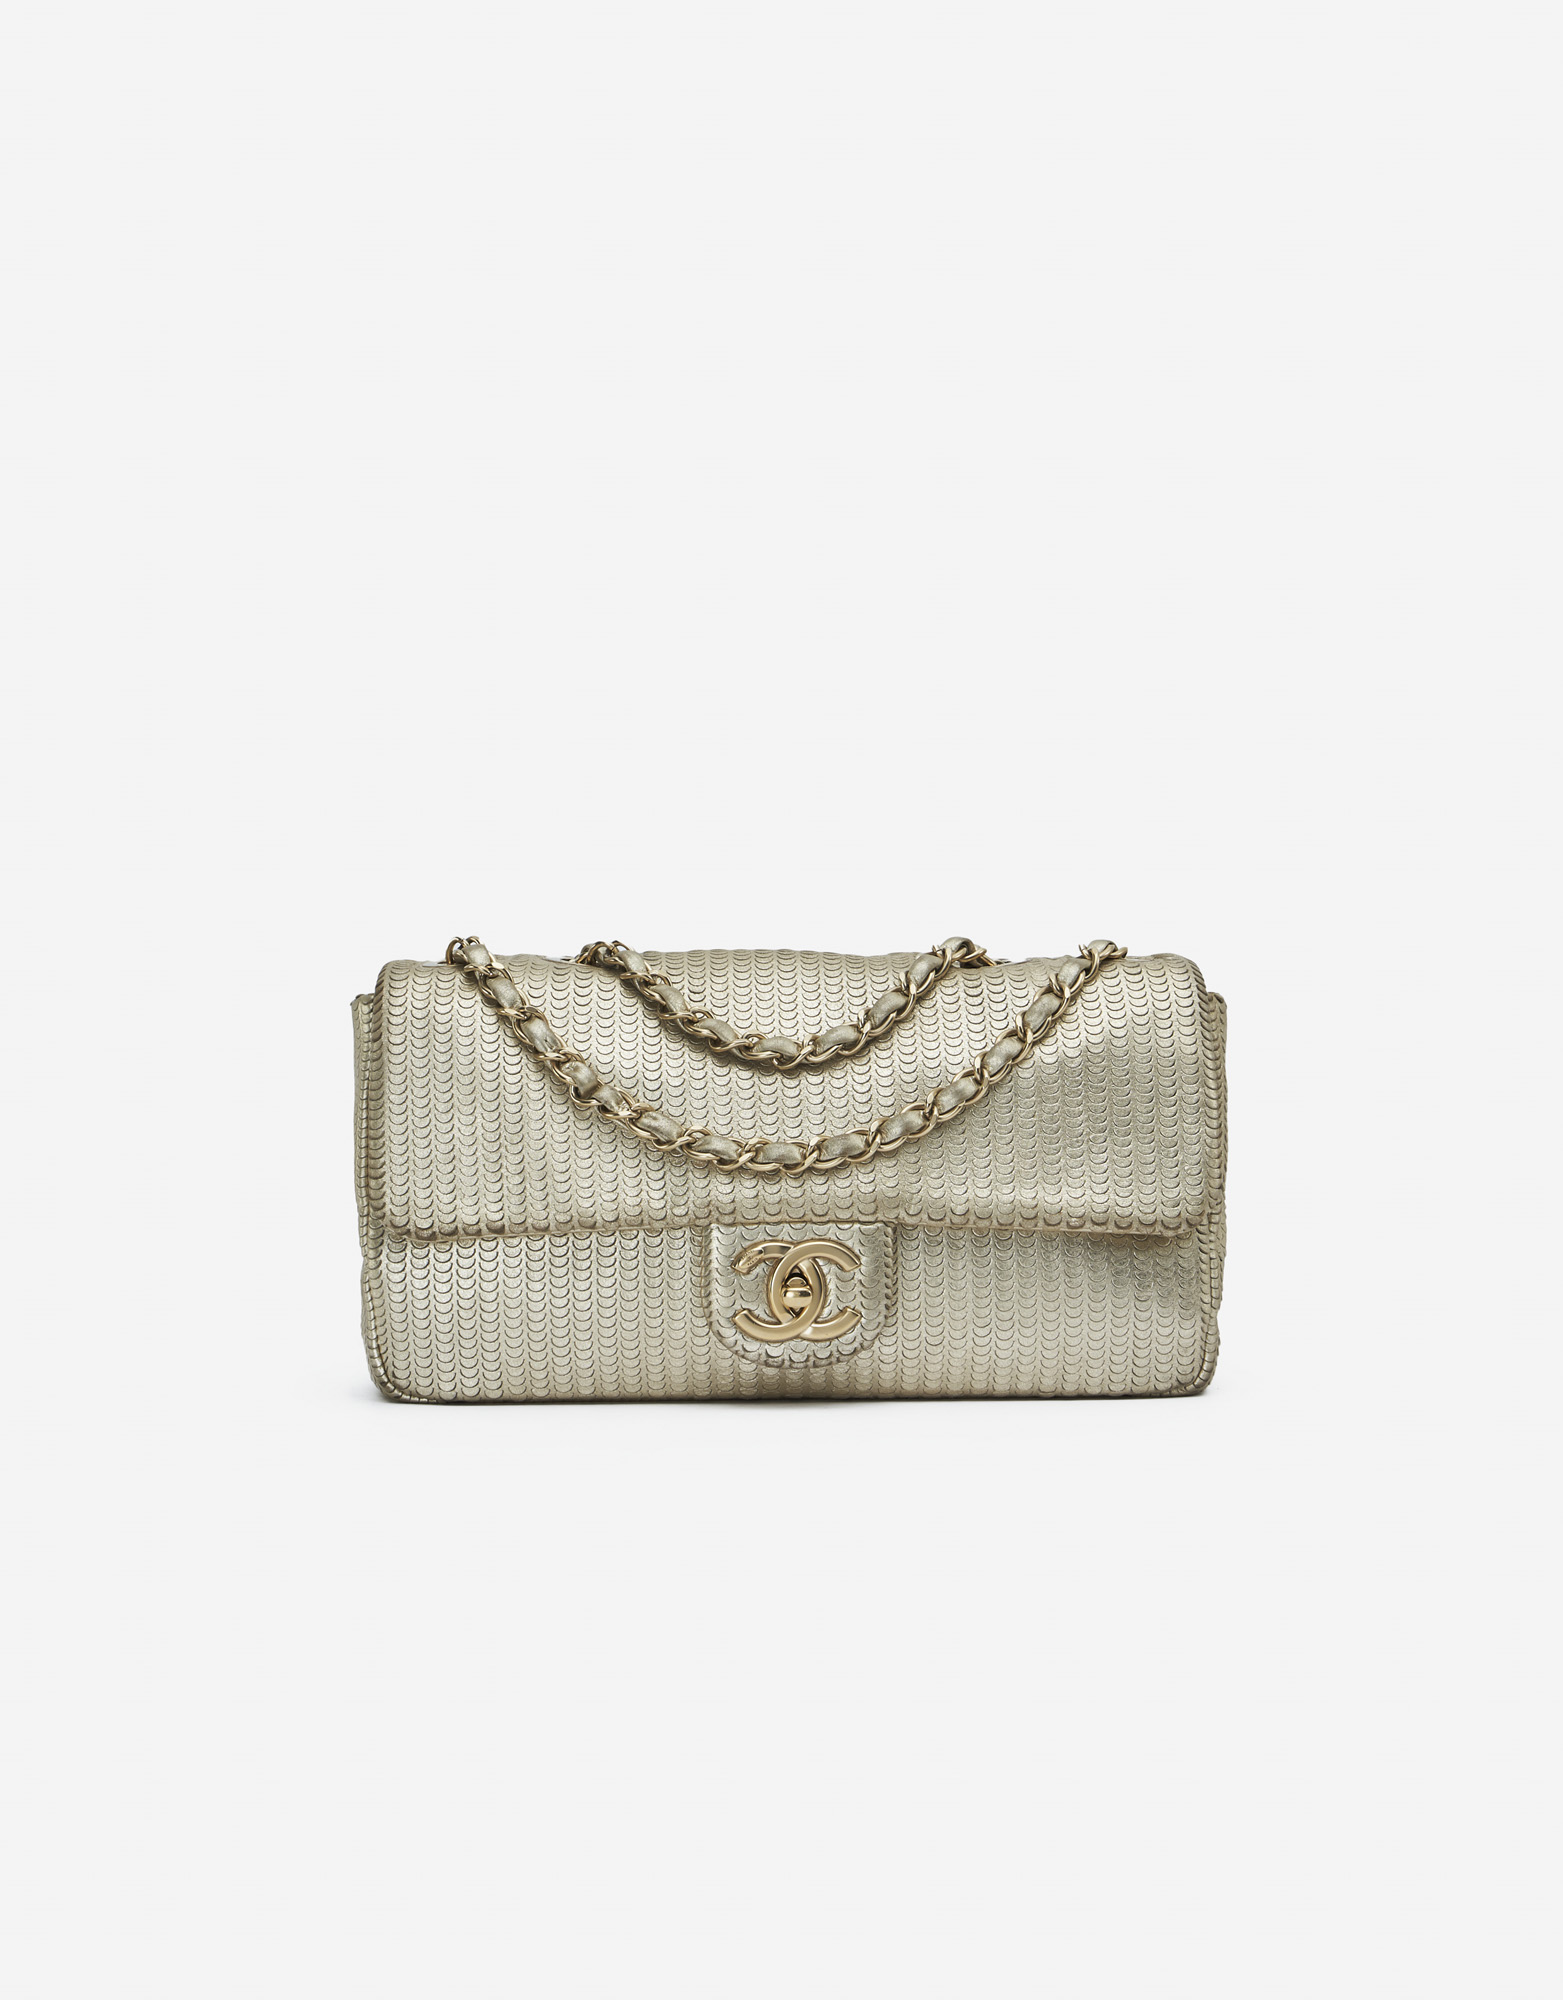 Chanel Timeless Medium Paillette Gold | SACLÀB